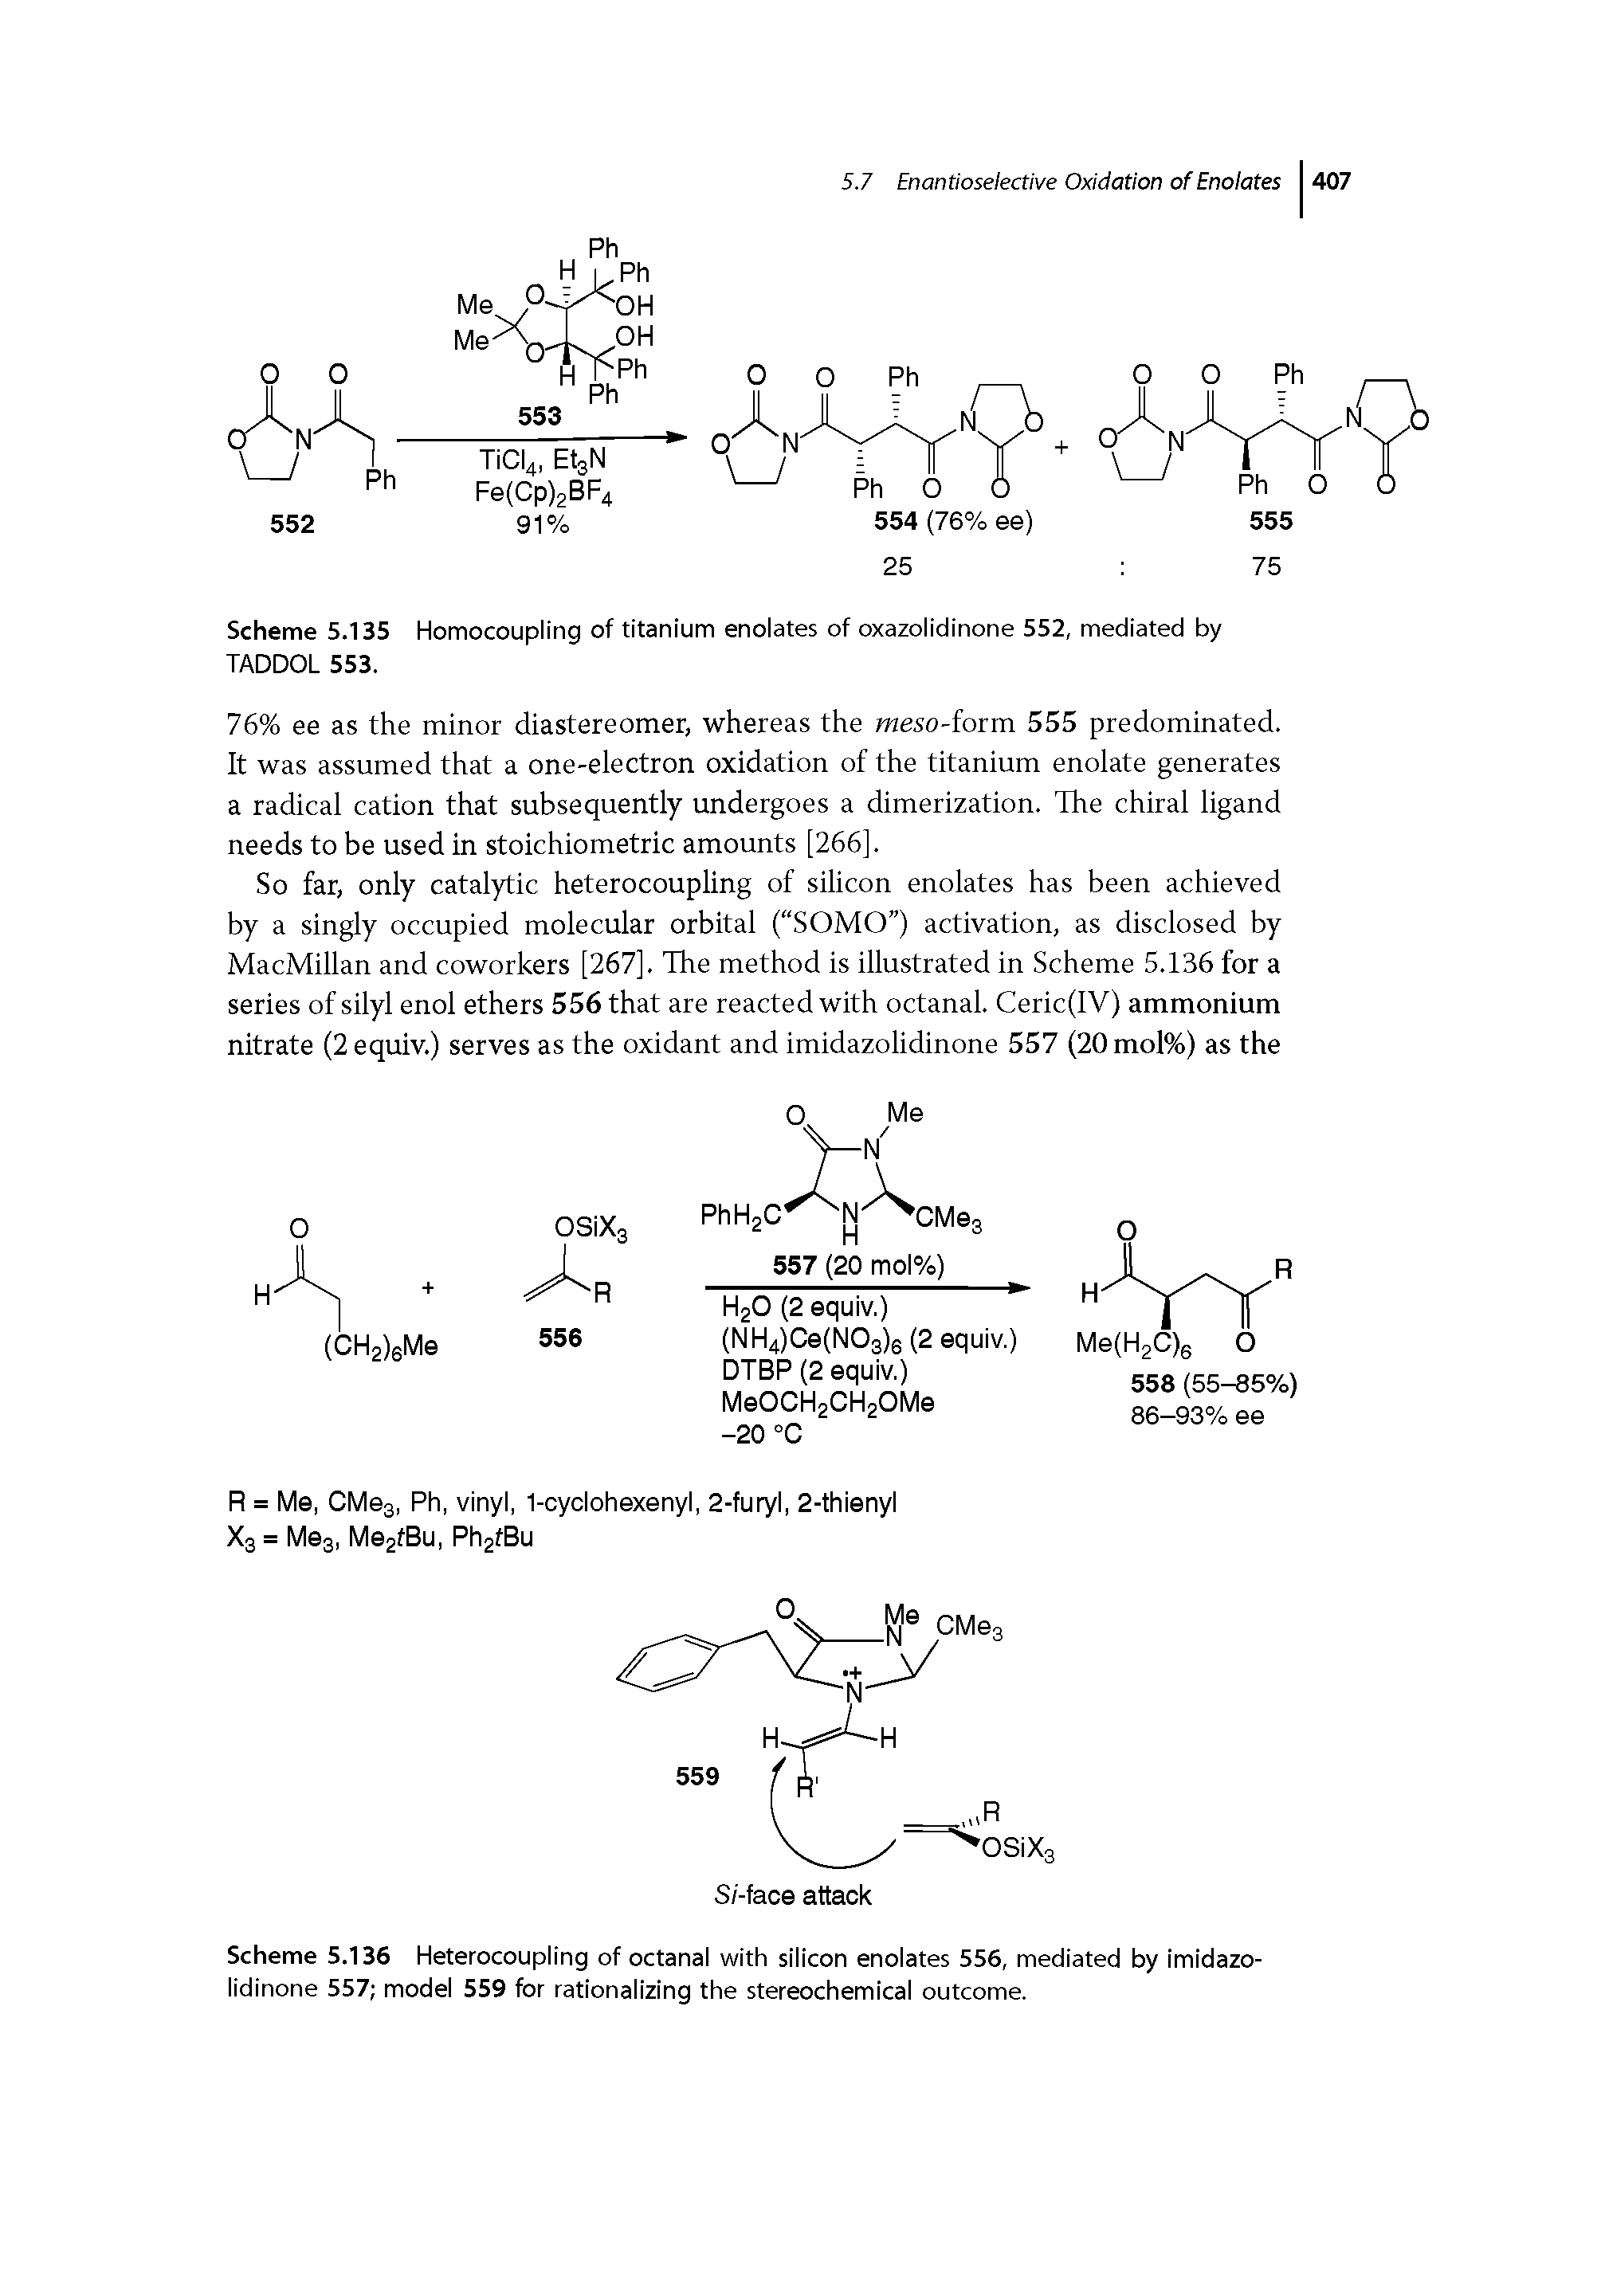 Scheme 5.135 Homocoupling of titanium enolates of oxazolidinone 552, mediated by TADDOL 553.